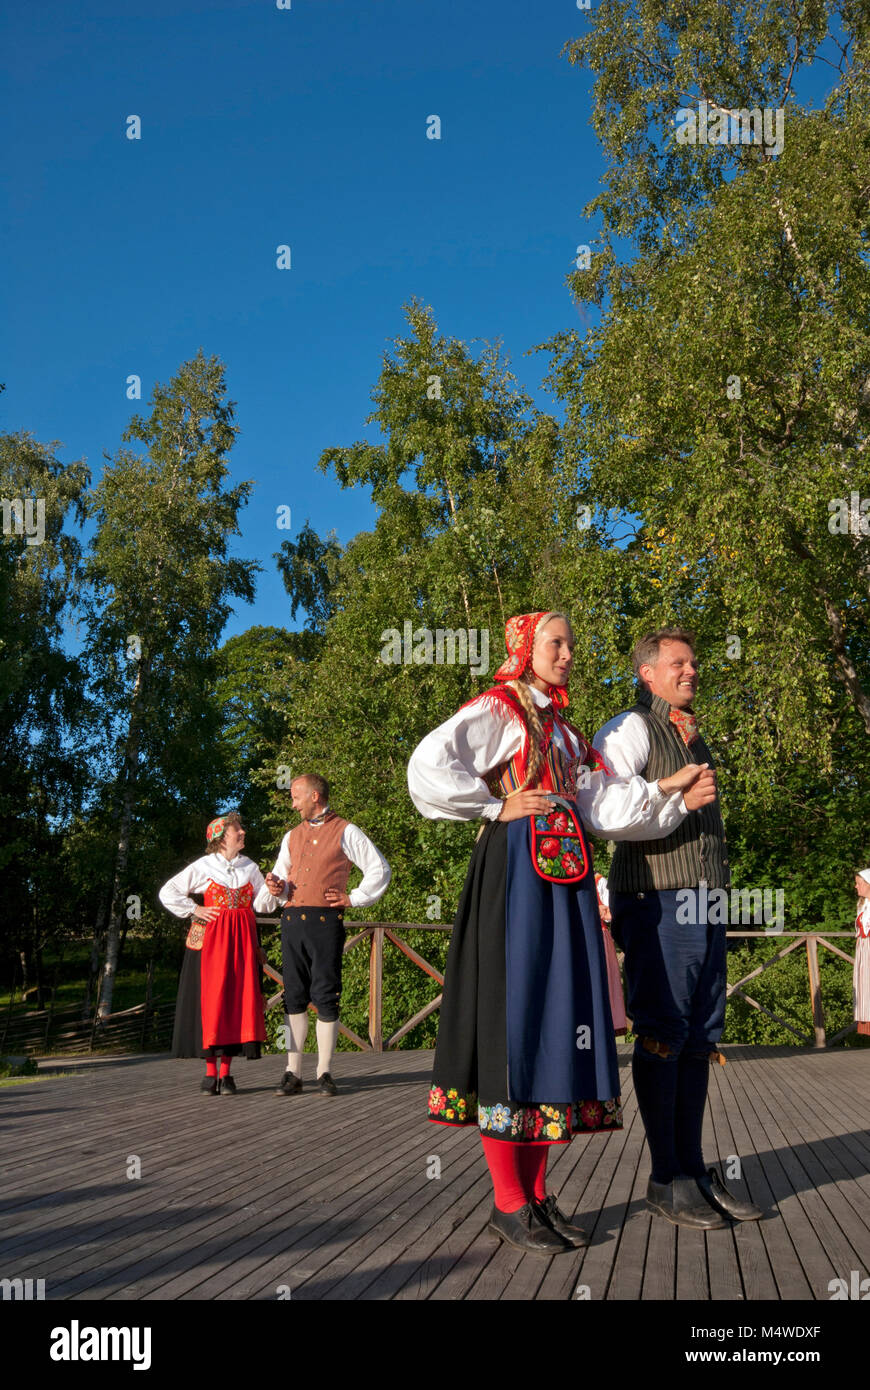 Folk dancers in traditional dress, Skansen Open-Air Museum, Stockholm,  Sweden Stock Photo - Alamy